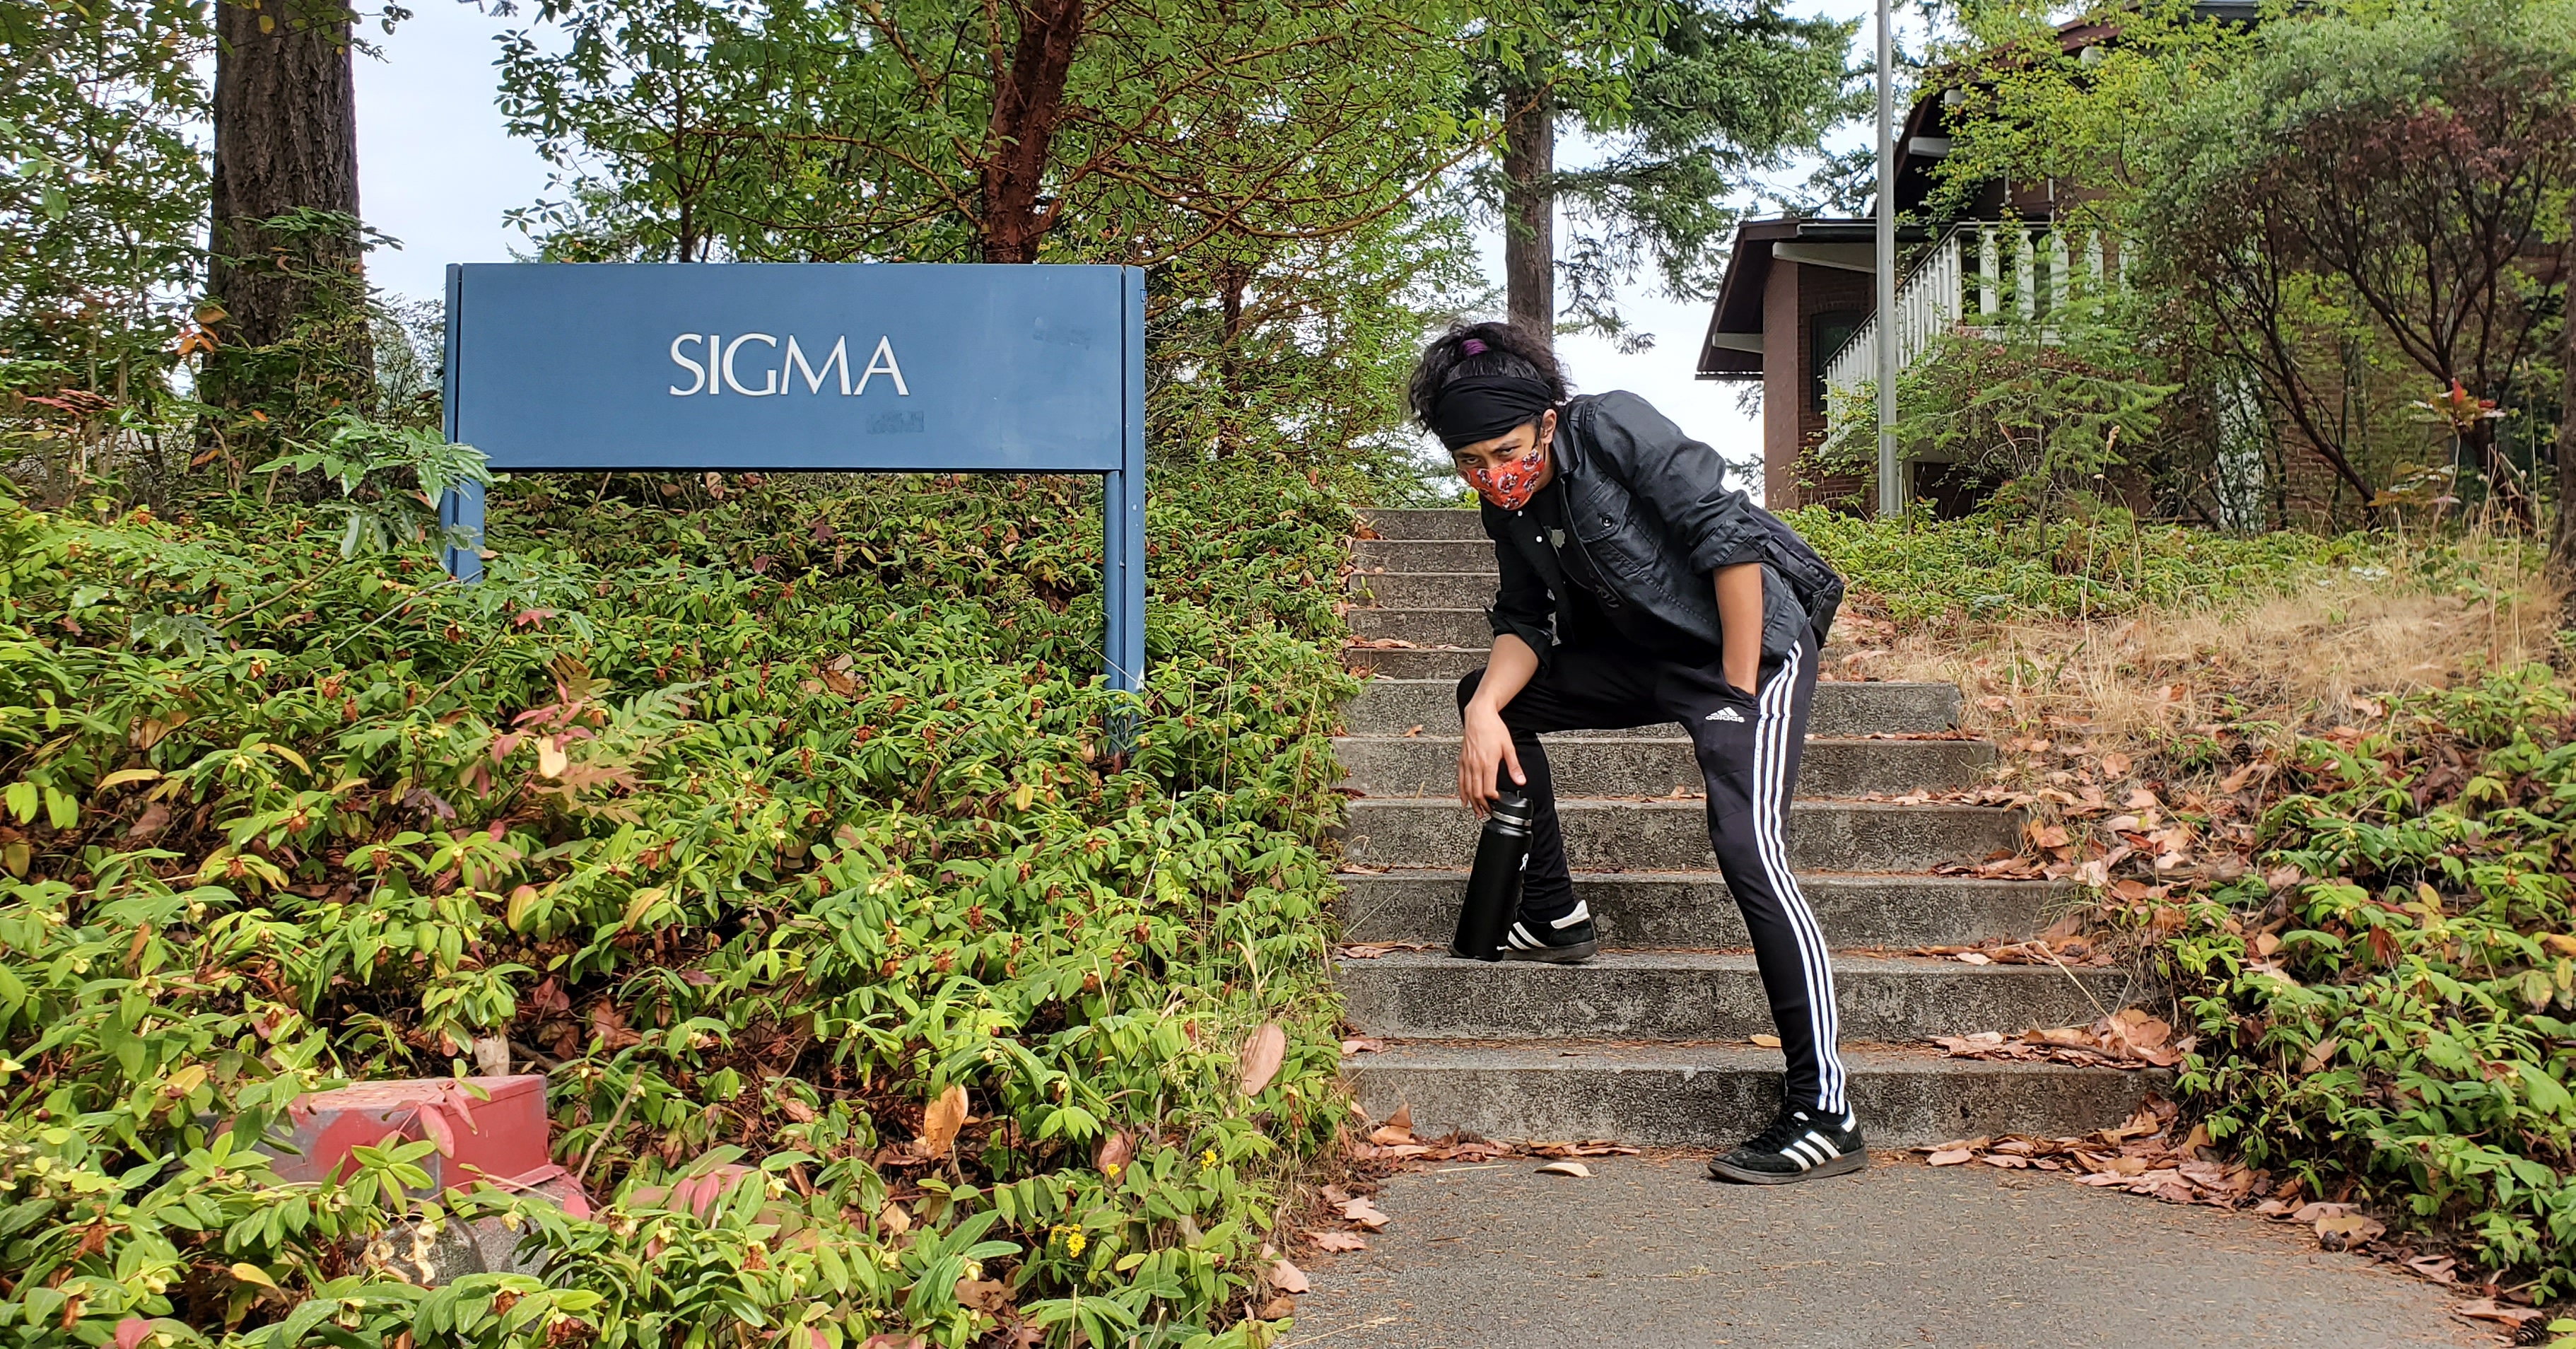 Nomoto posing near the Ridgeway Sigma building sign at Western Washington University